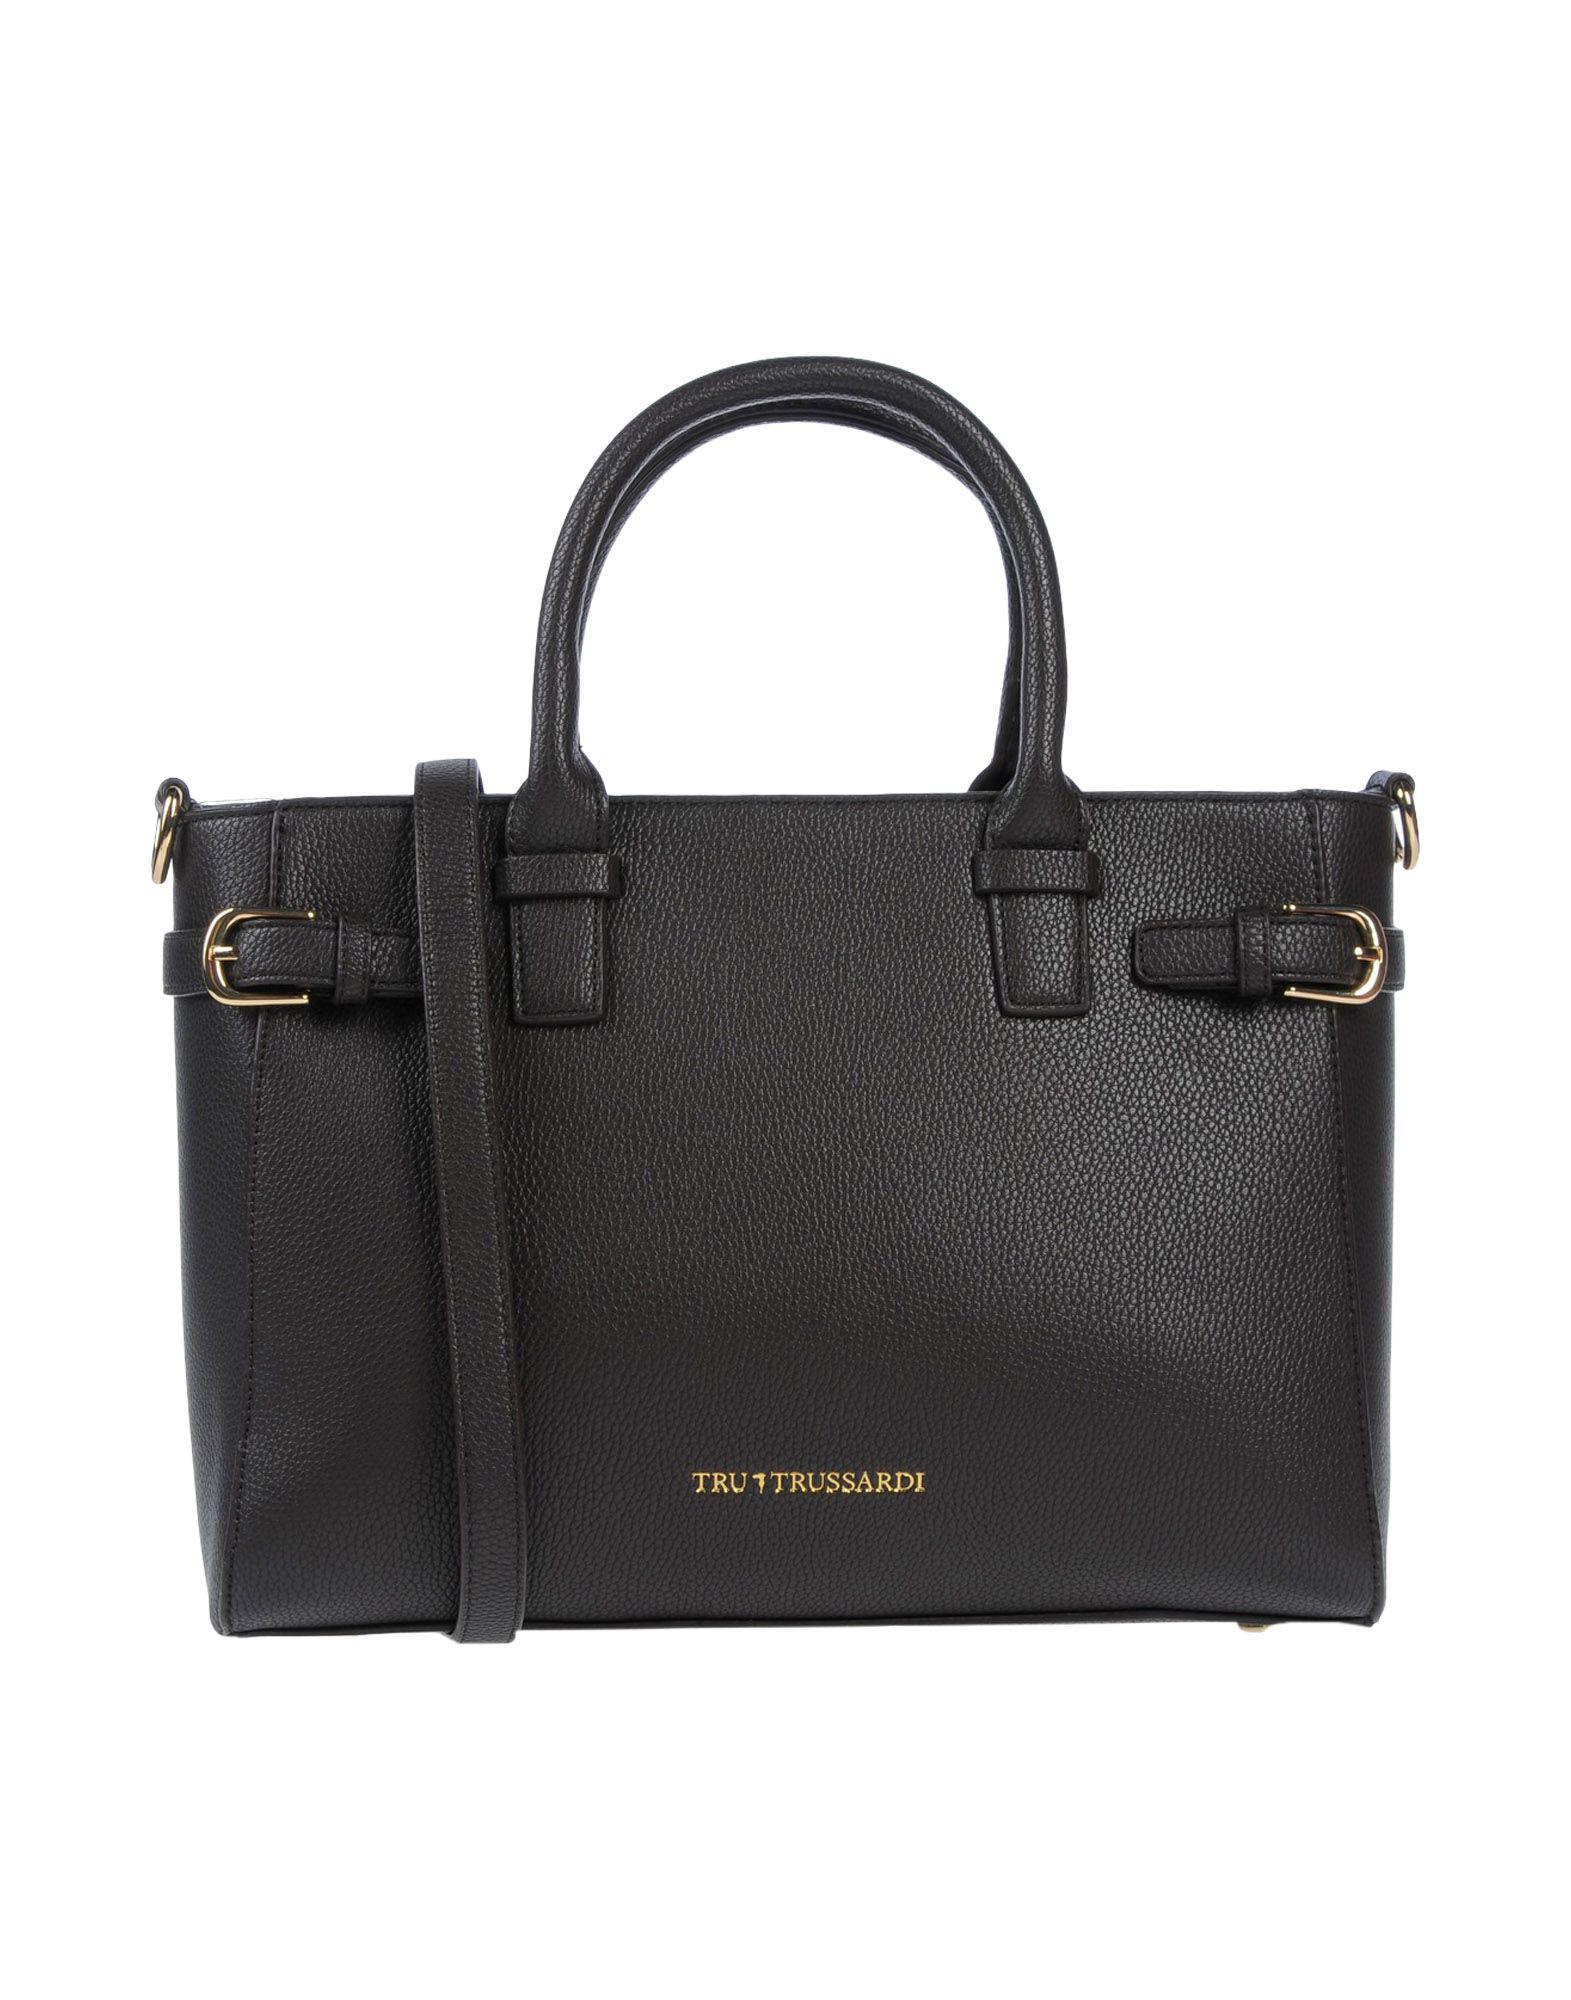 Tru Trussardi Leather Handbag in Dark Brown (Brown) - Lyst